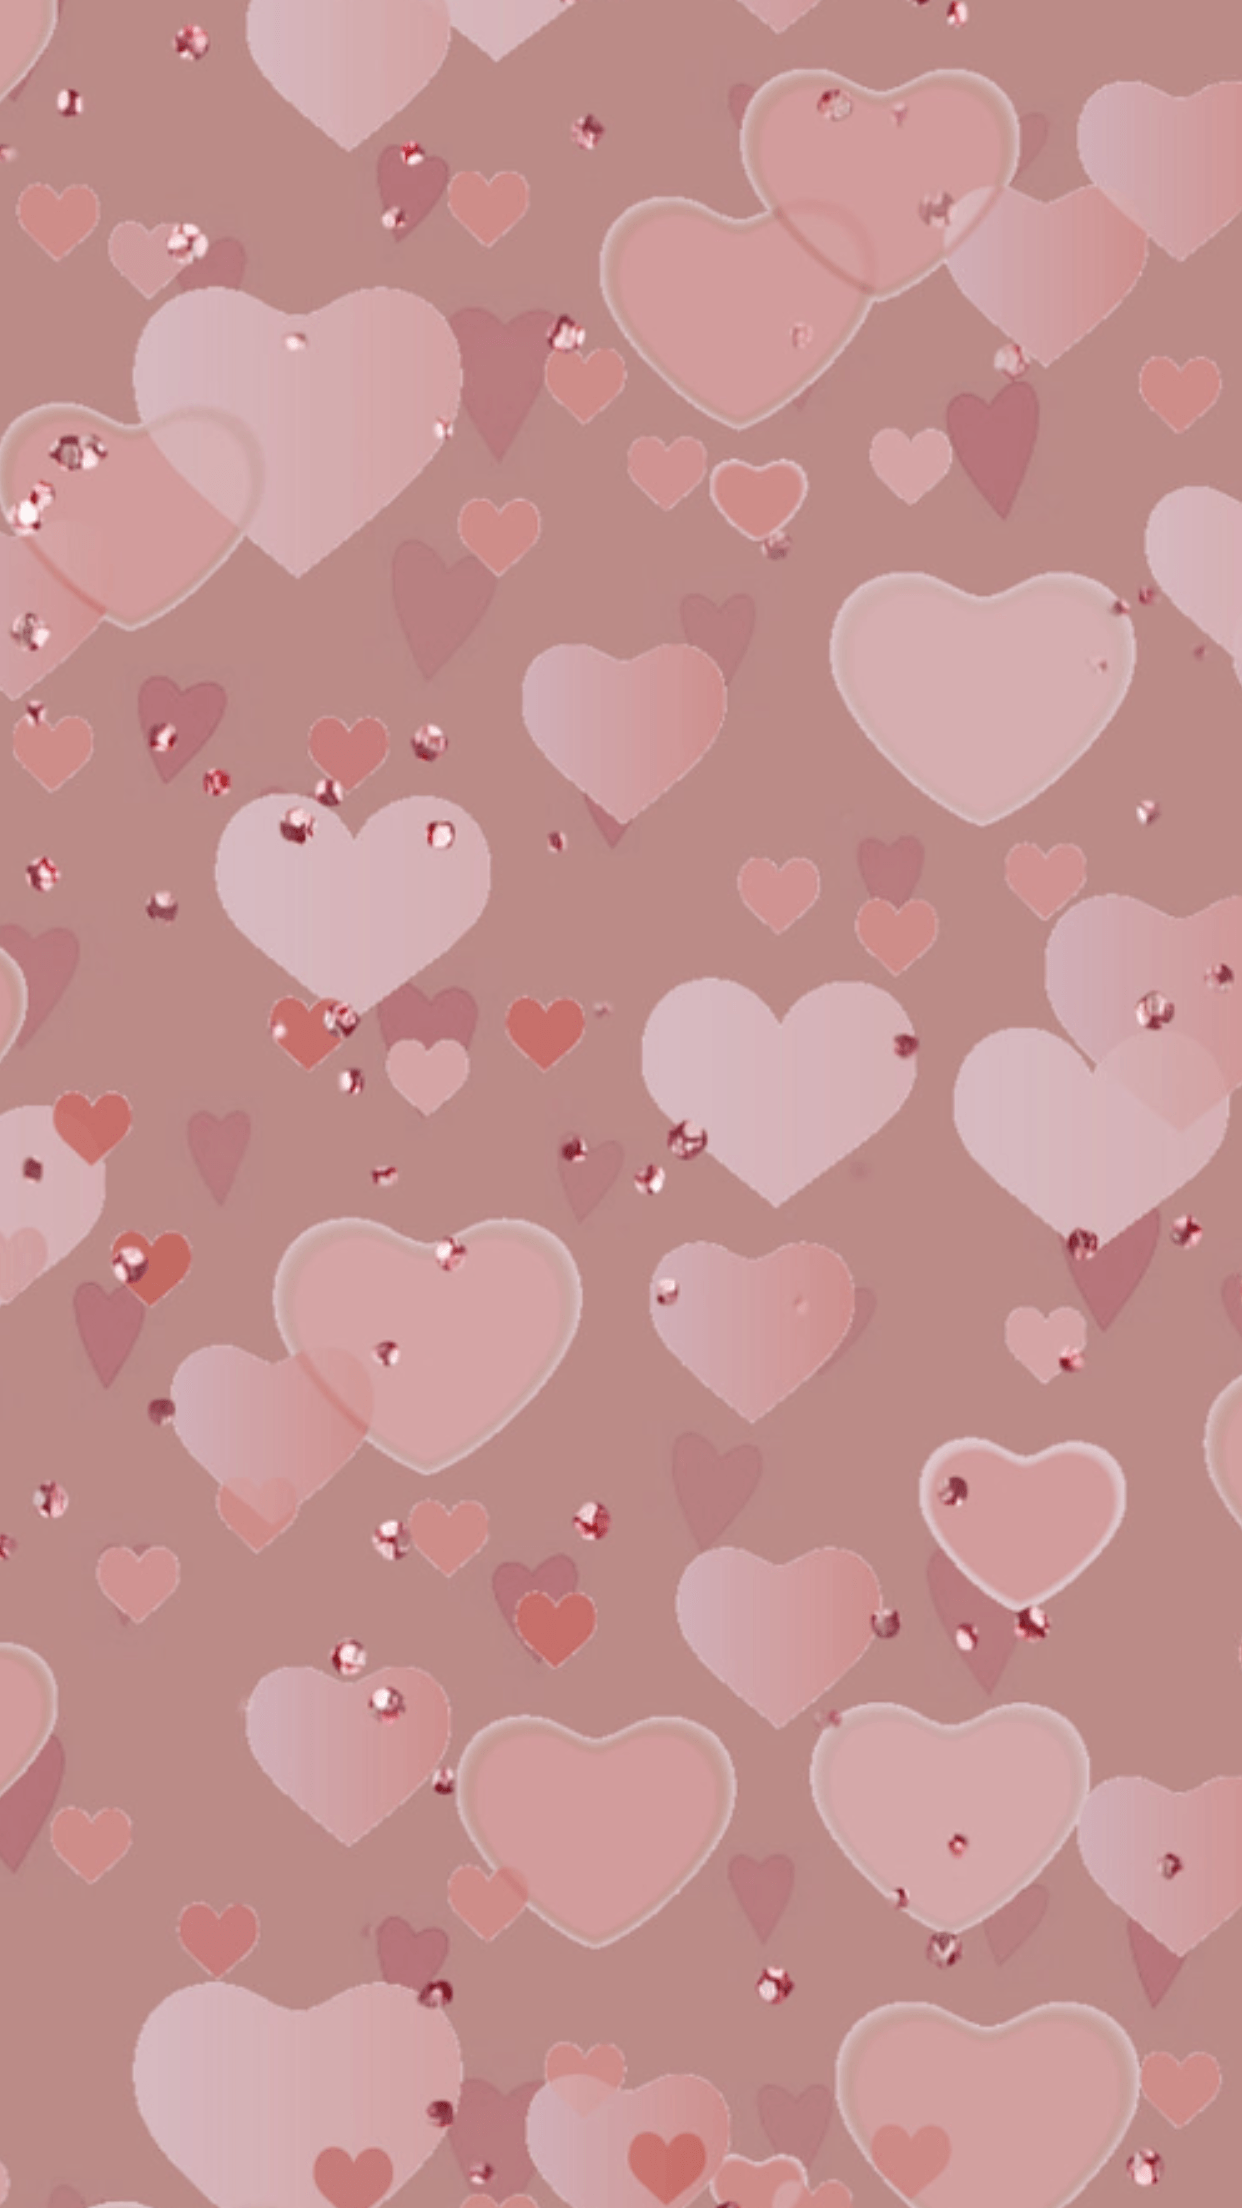 Rose Gold Glitter Heart Frame Pink Stock Vector Royalty Free 1264179163   Shutterstock